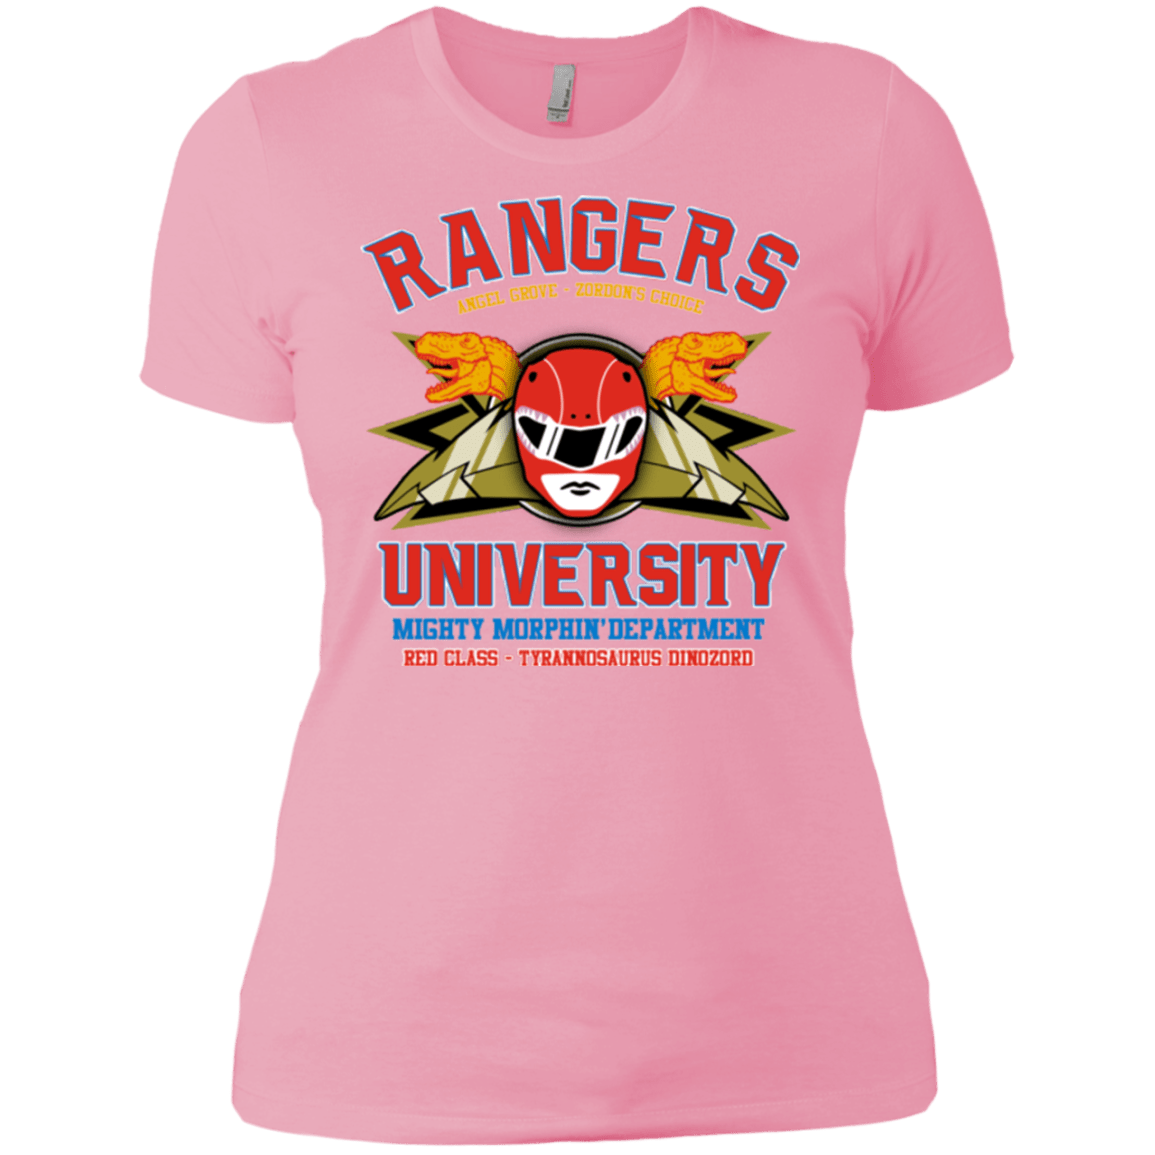 Rangers U - Red Ranger Women's Premium T-Shirt